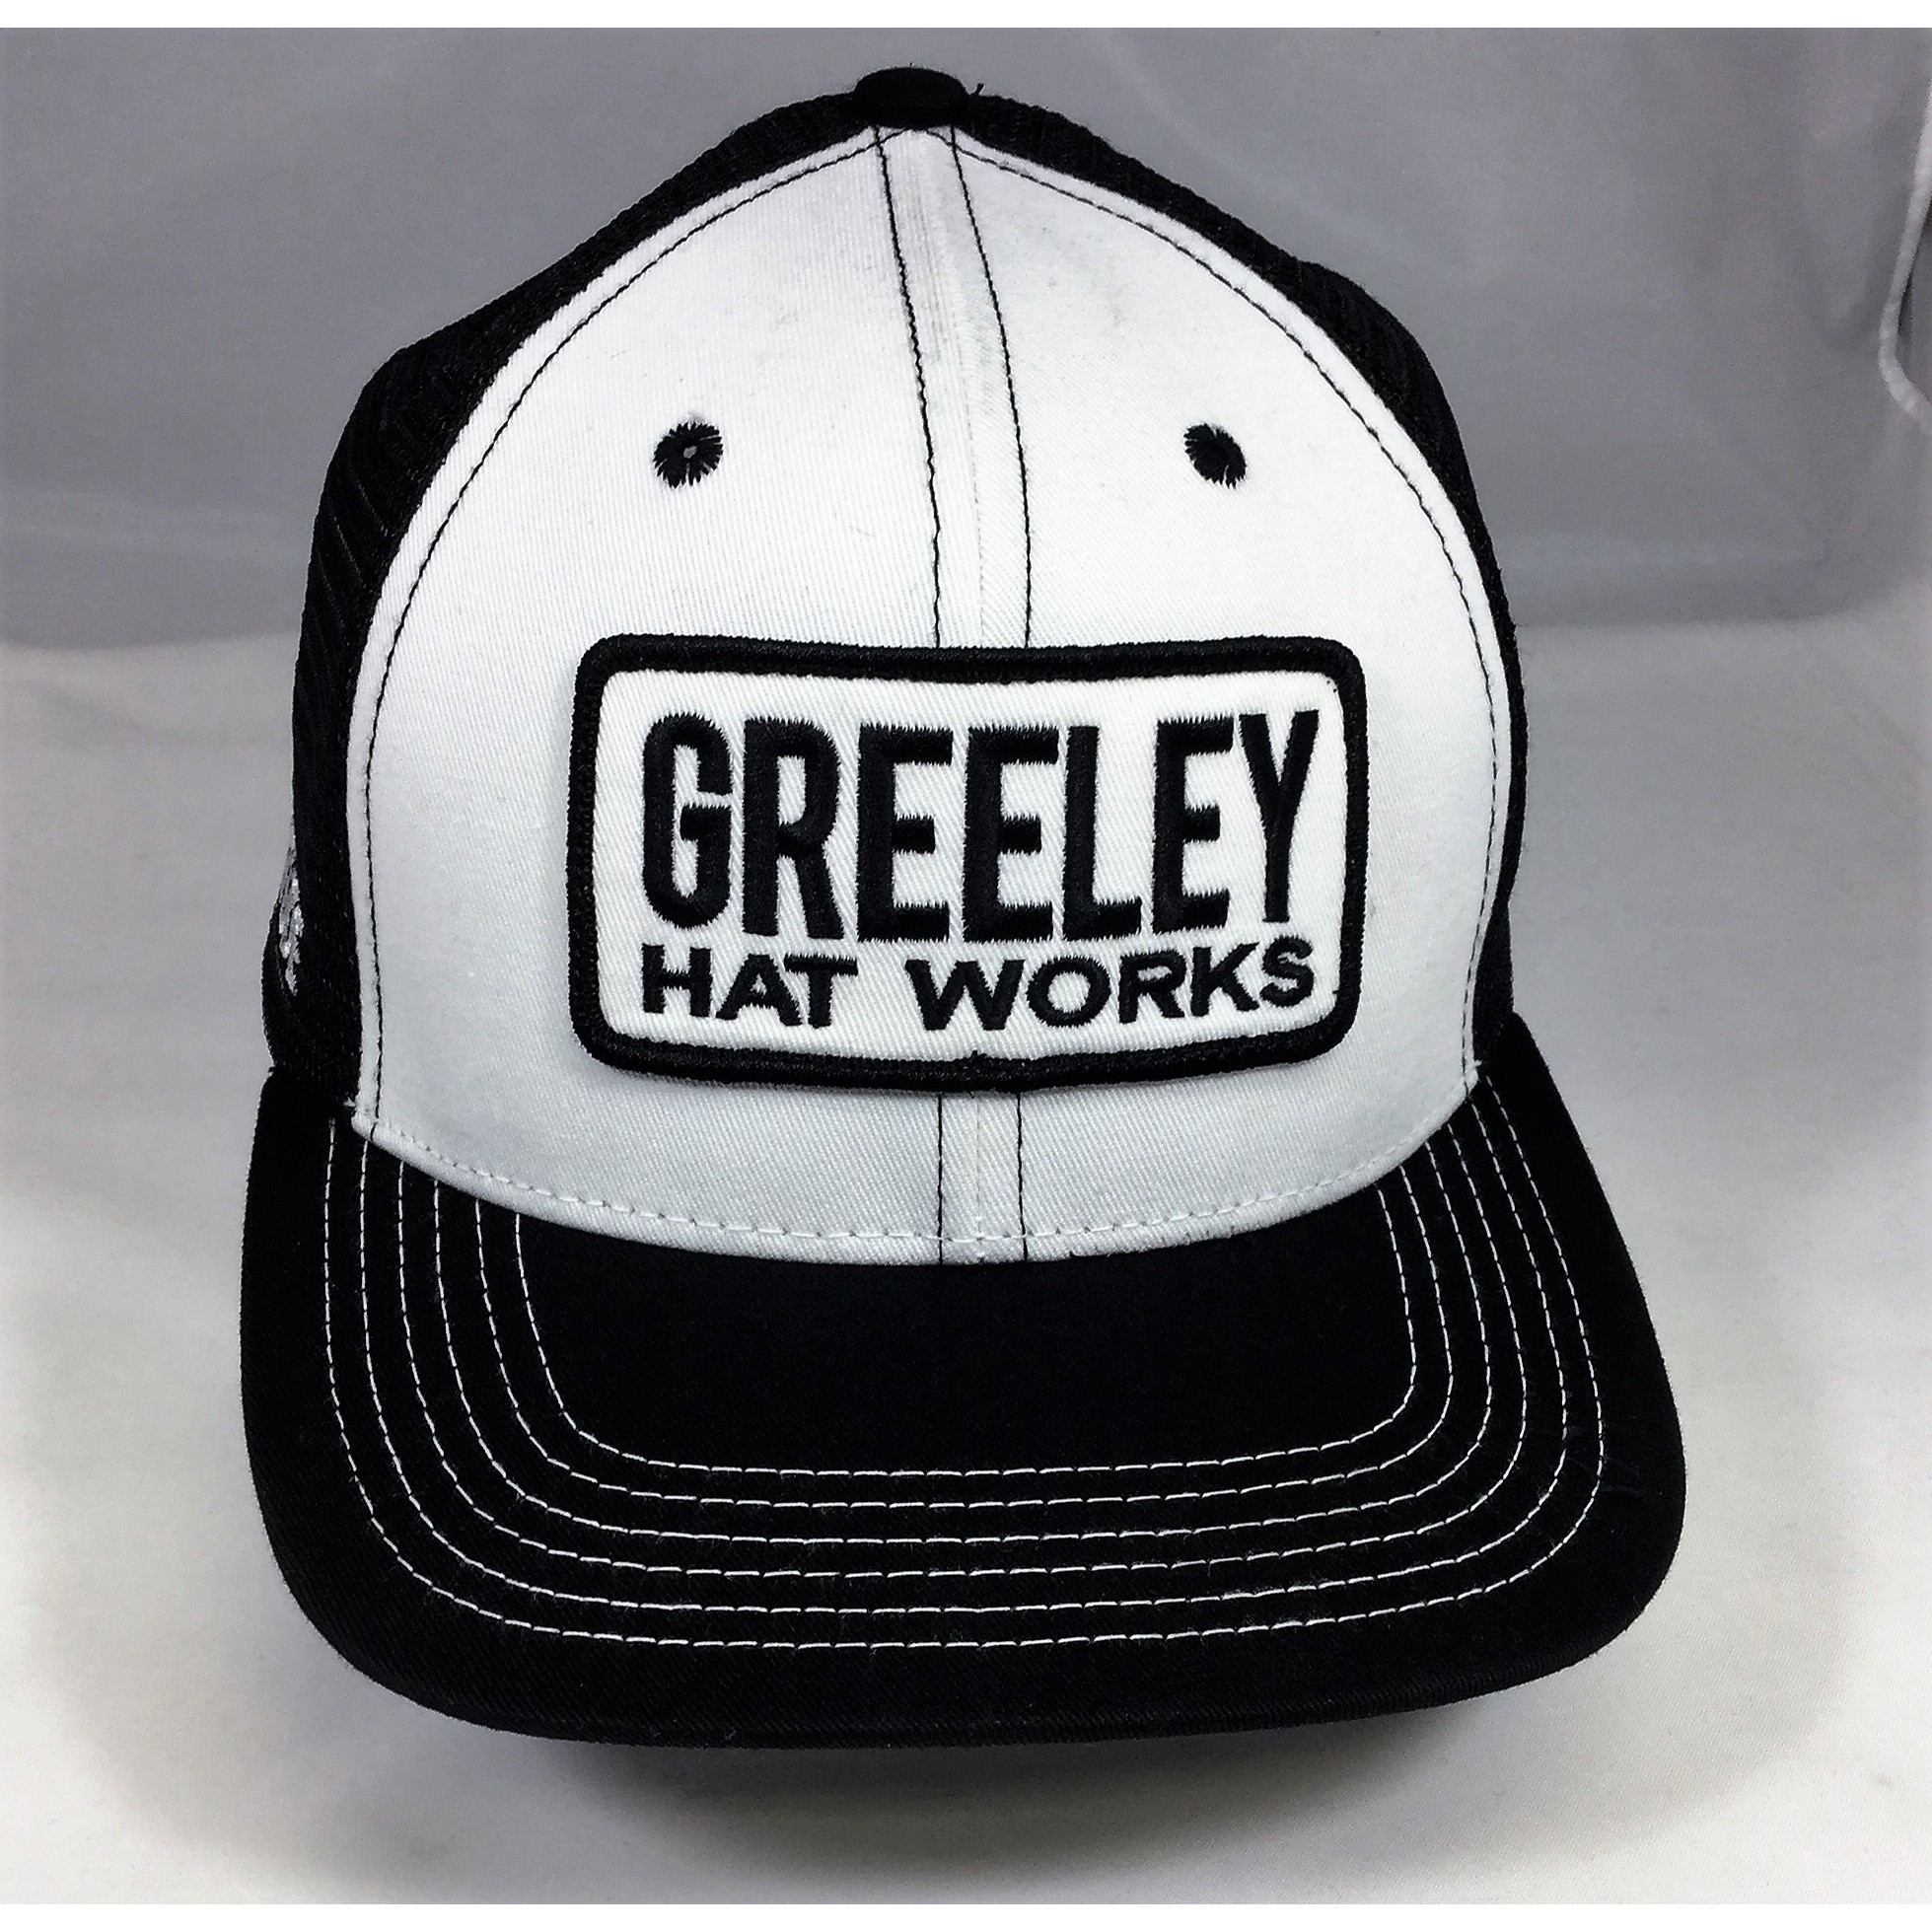 Greeley Hat Works